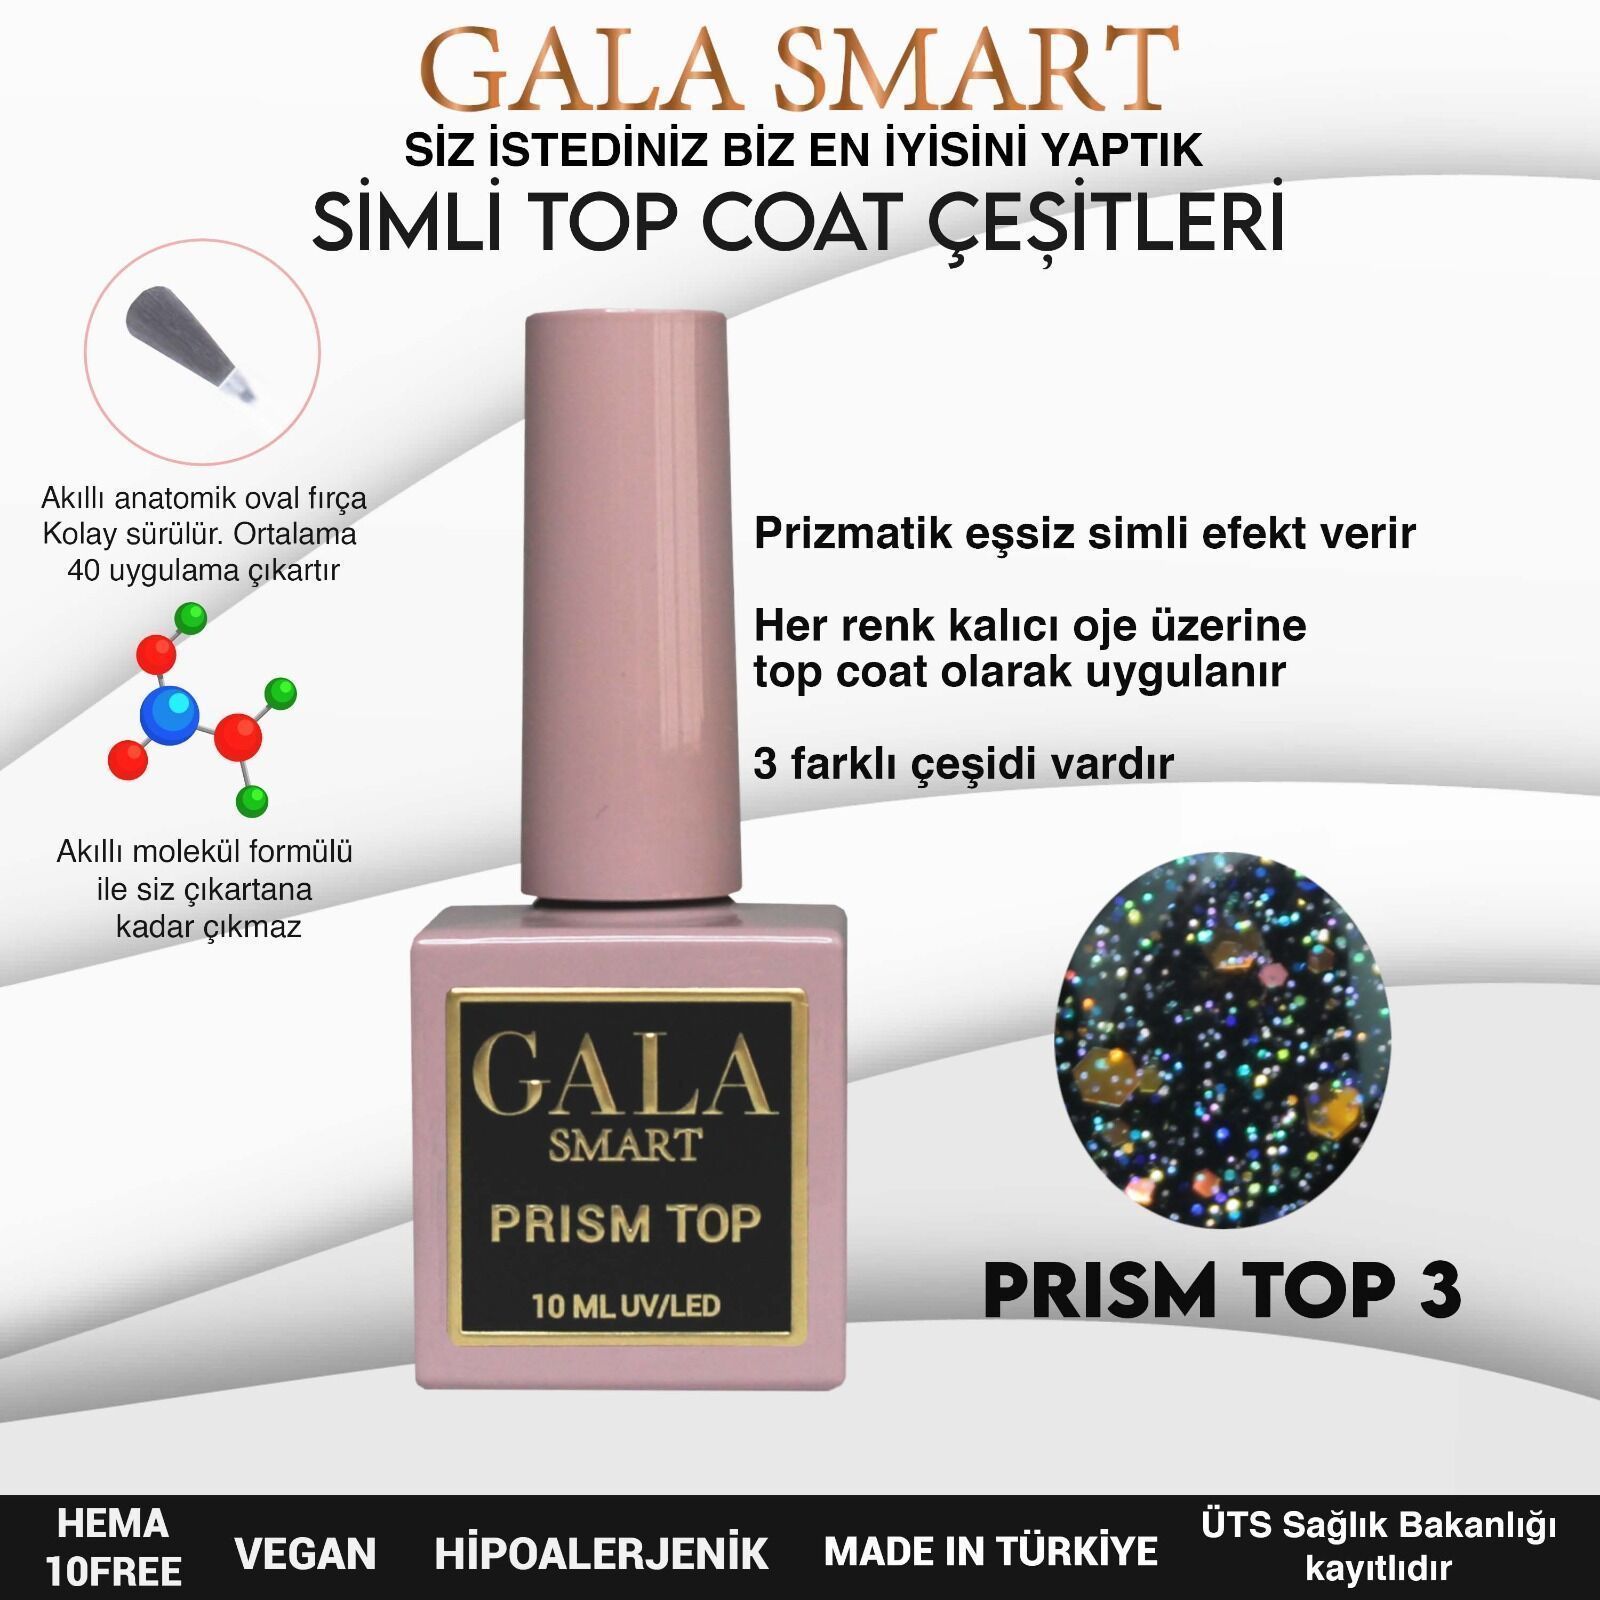 GALA SMART PRISM TOP NO:3 10 mle